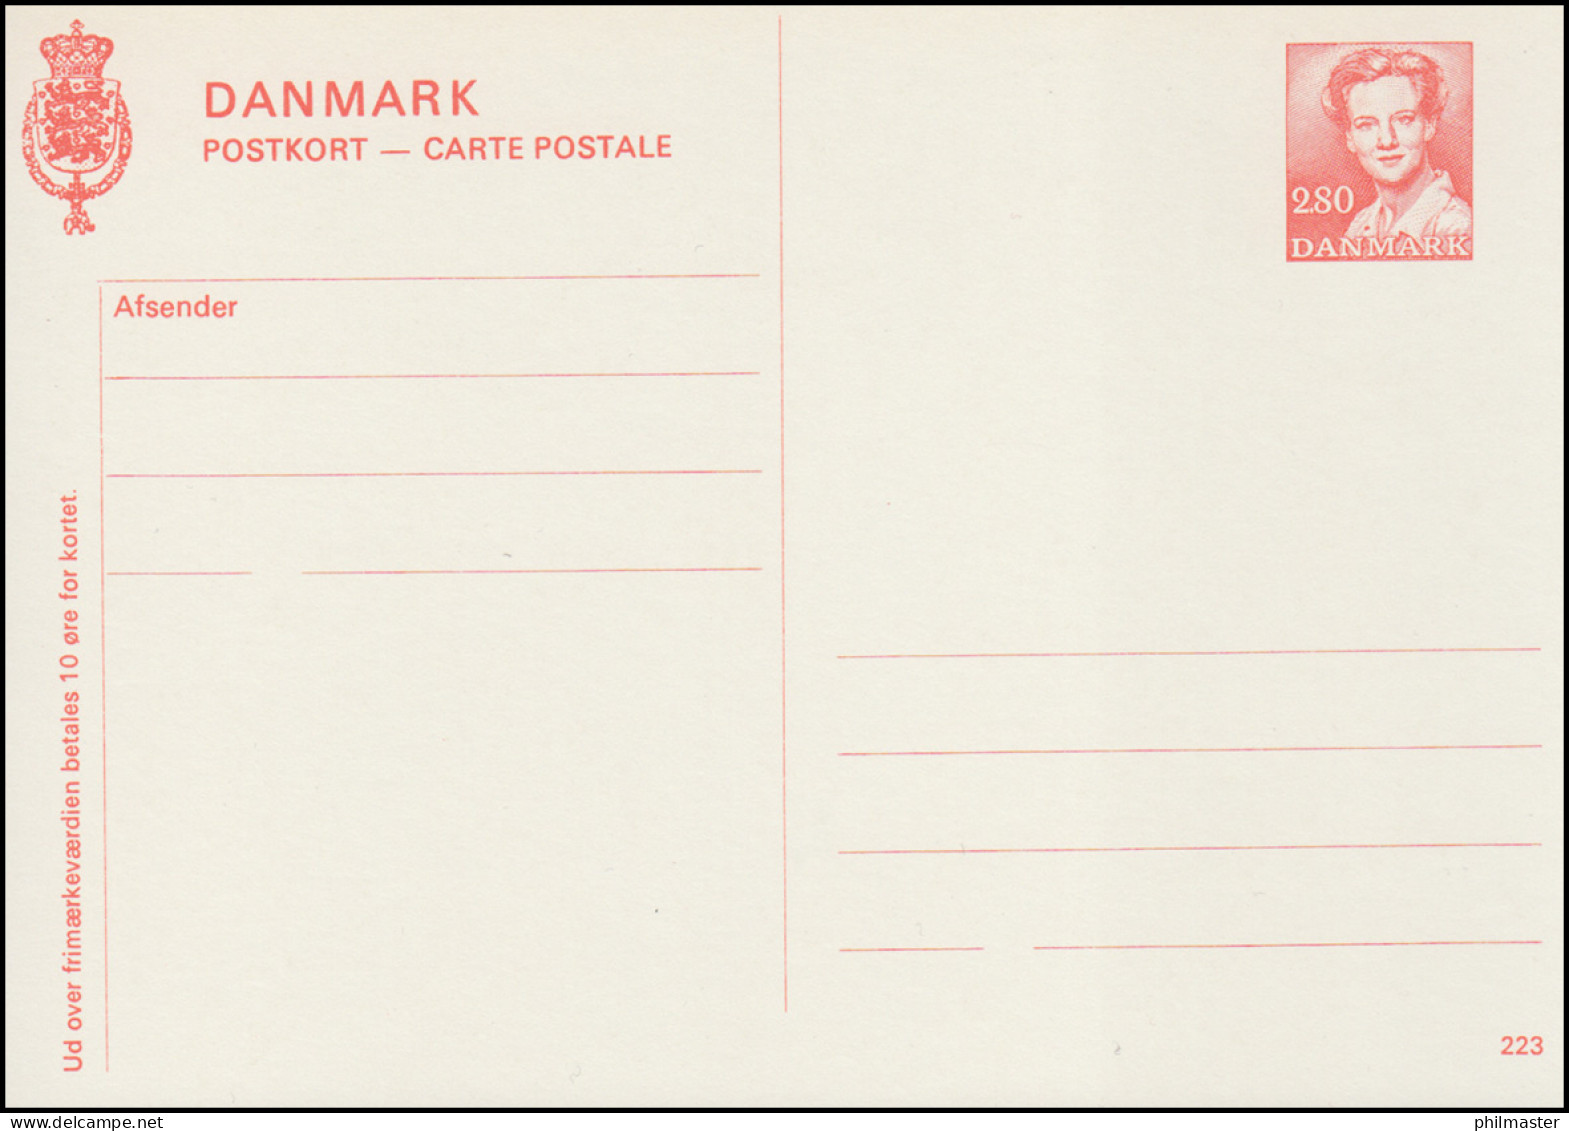 Dänemark Postkarte P 280 Königin Margrethe 2,80 Kronen, Kz. 223, ** - Enteros Postales